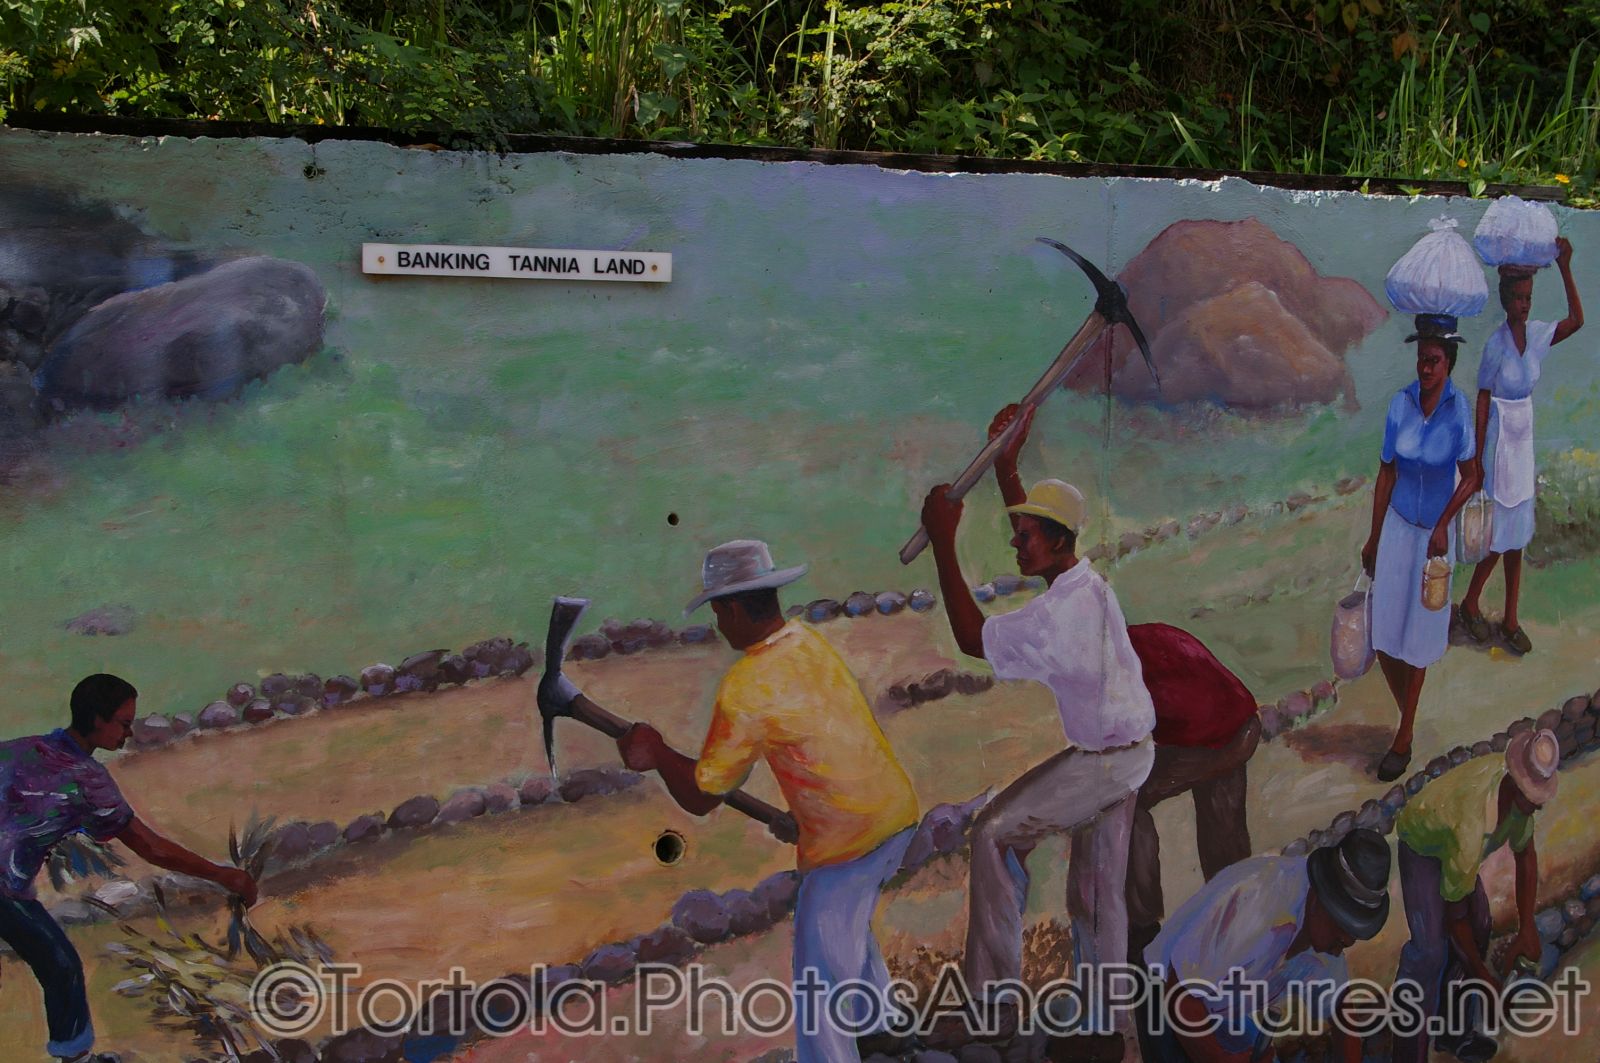 Banking Tannia Land mural in Tortola.jpg
